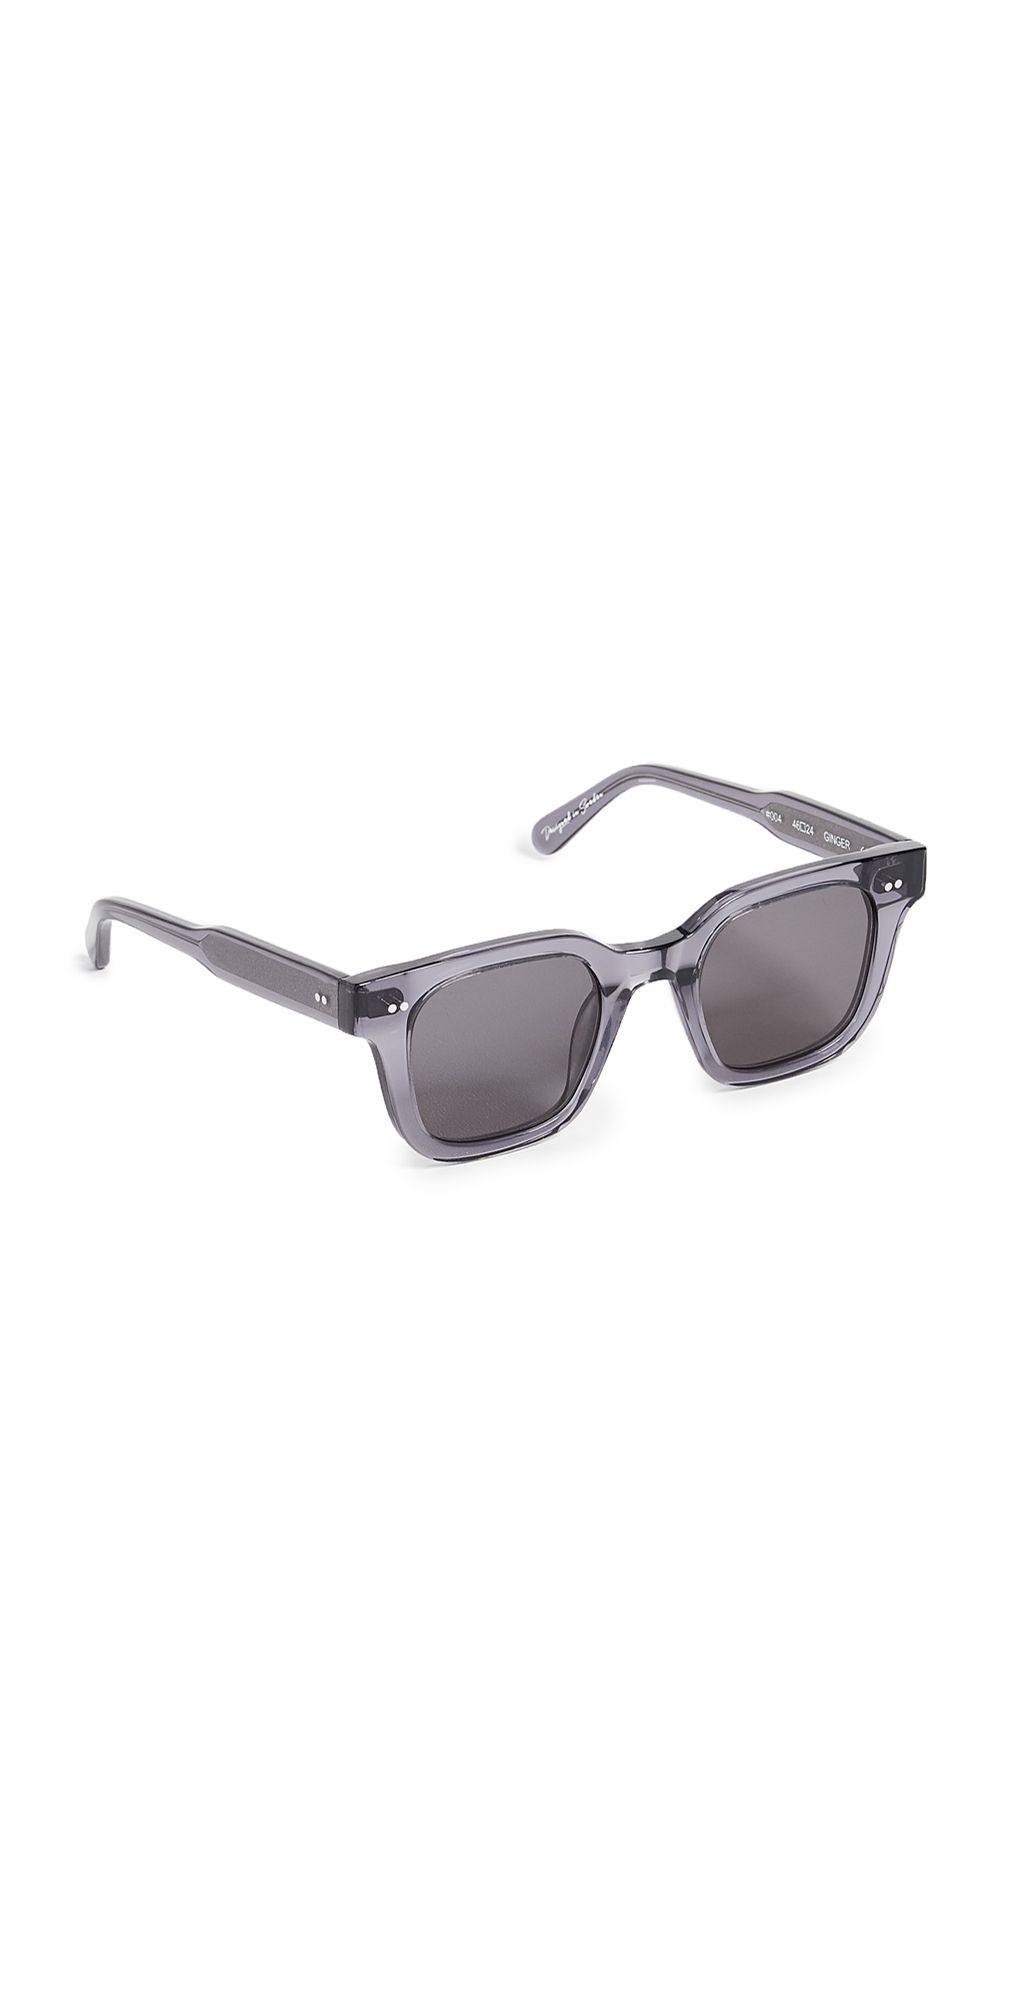 Chimi 004 Sunglasses | Shopbop